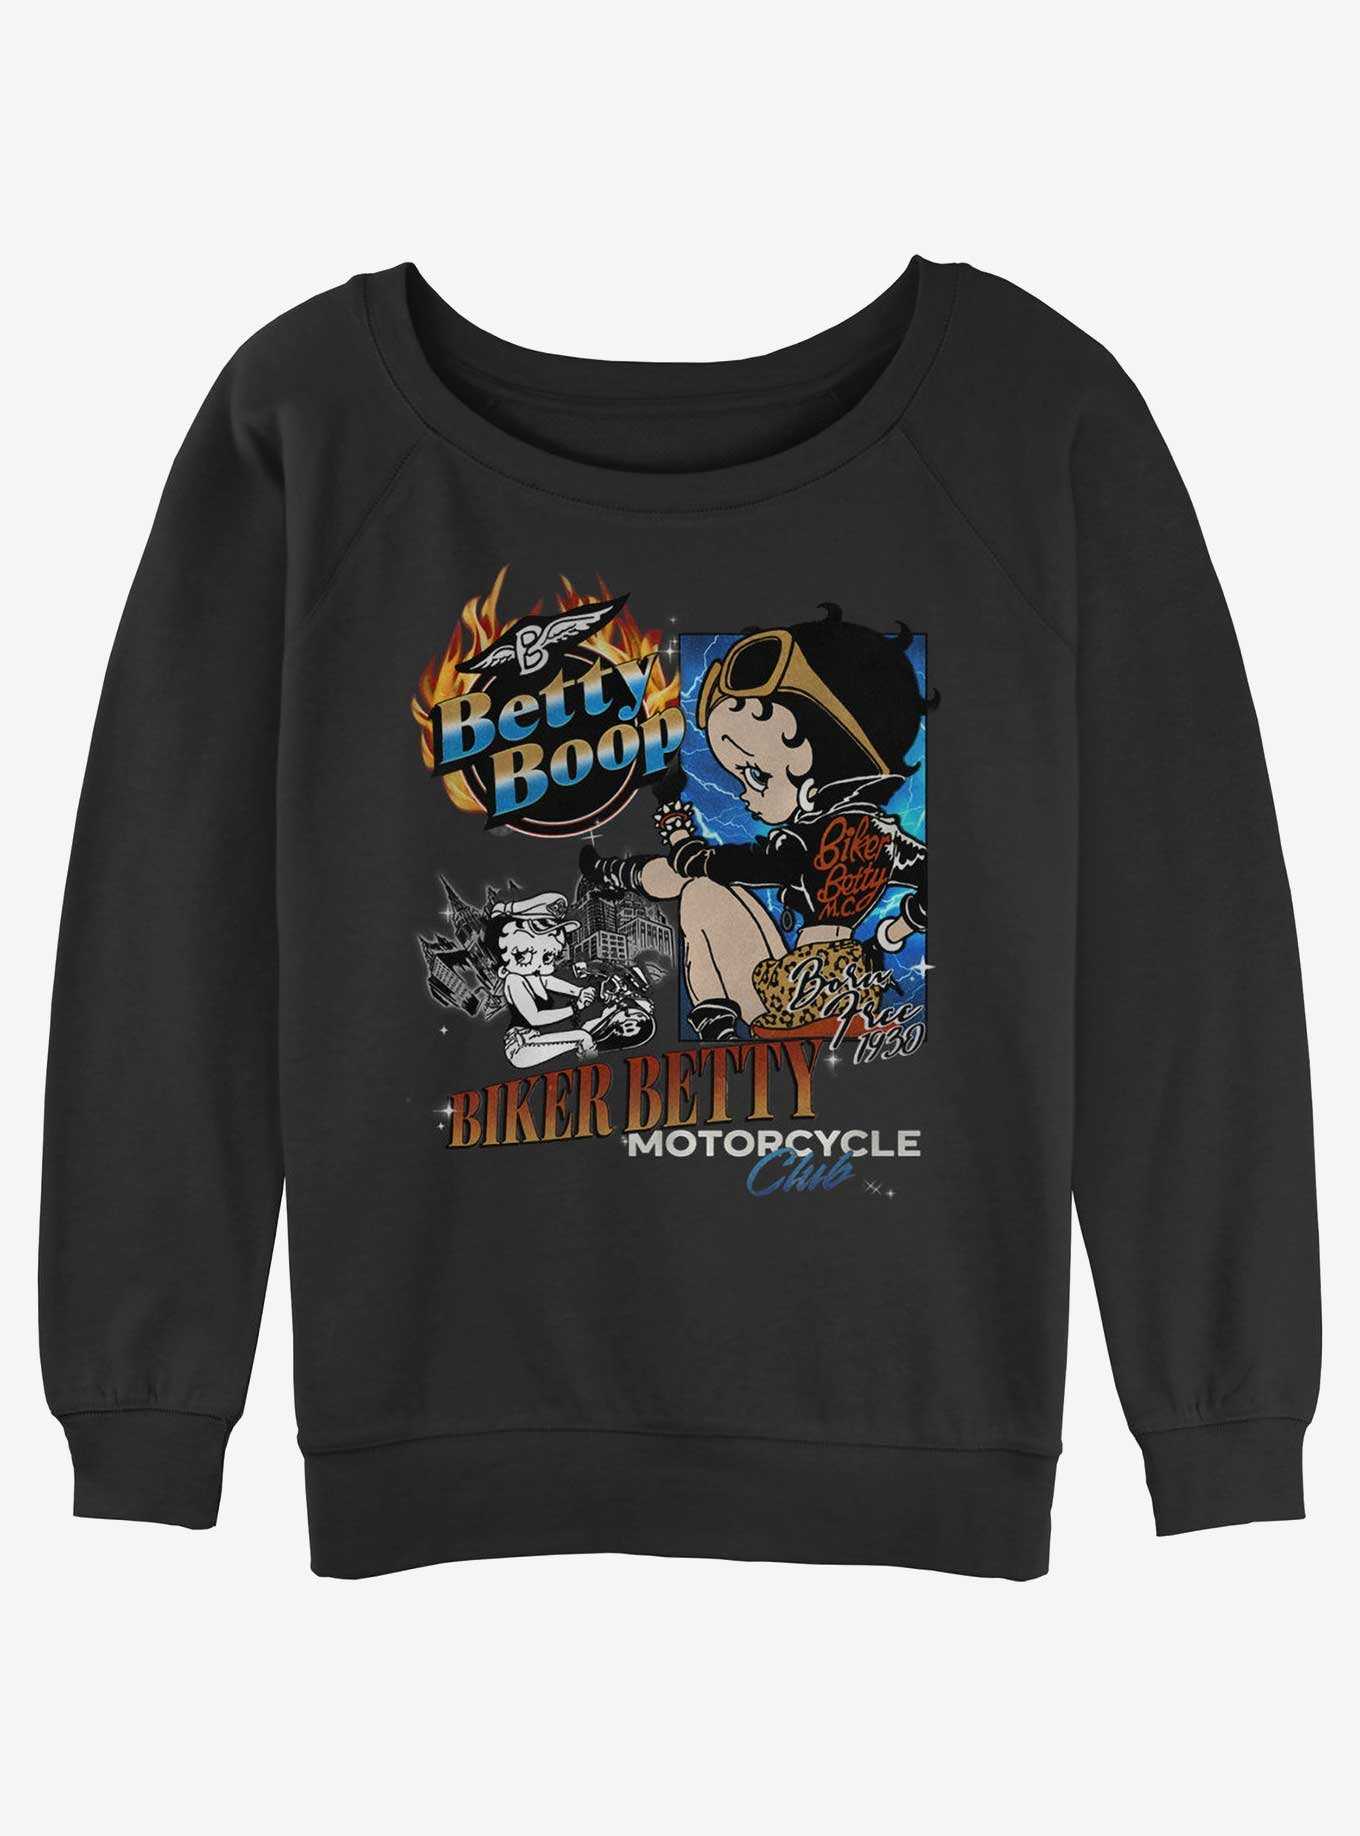 Betty Boop Biker Betty Womens Slouchy Sweatshirt, , hi-res